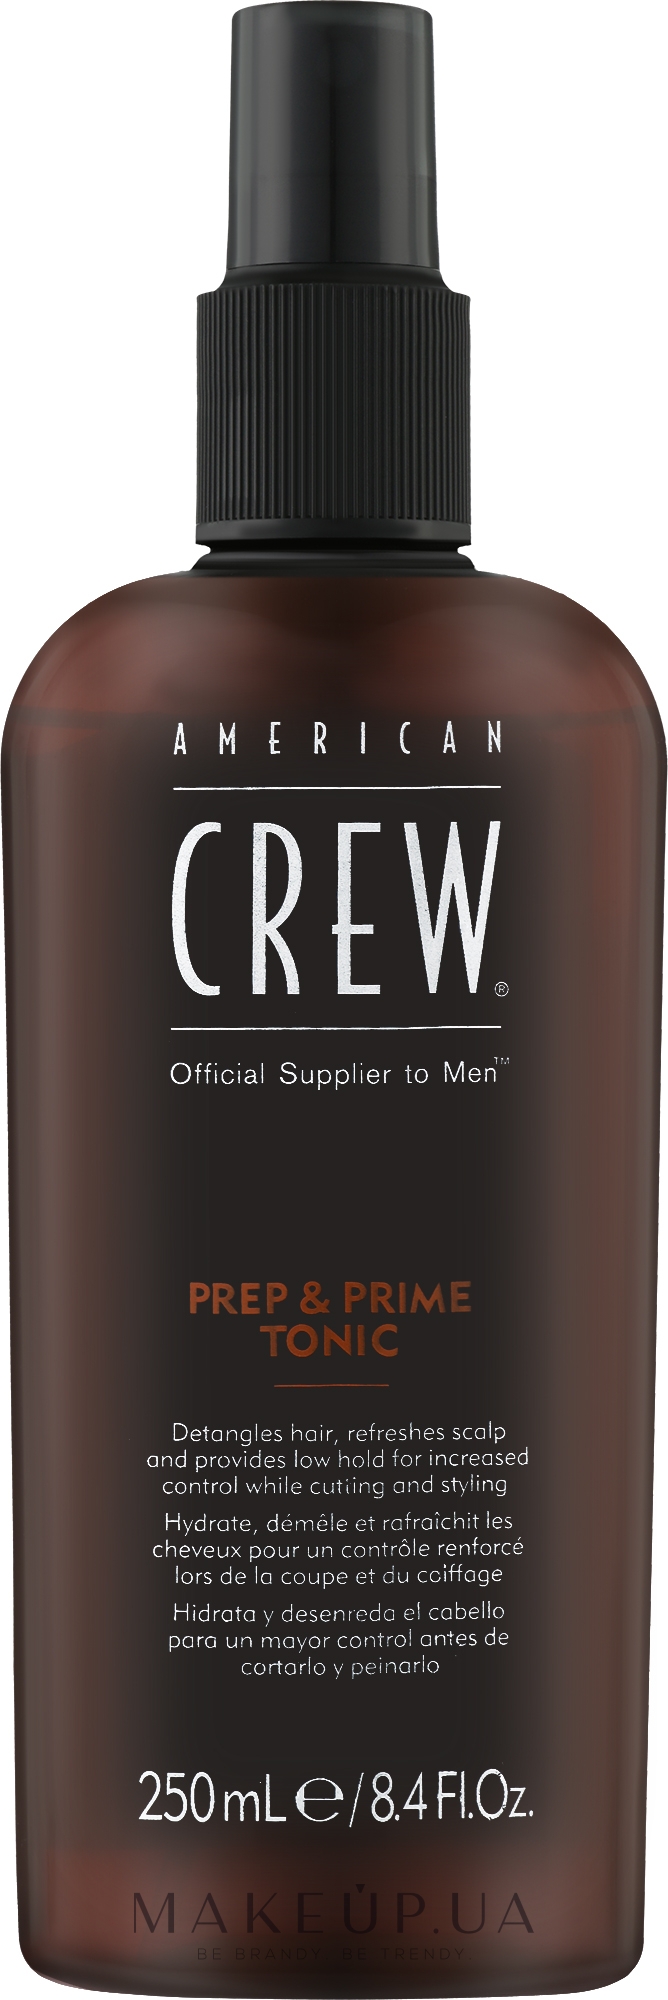 Тонік для волосся - American Crew Official Supplier to Men Prep & Prime Tonic — фото 250ml